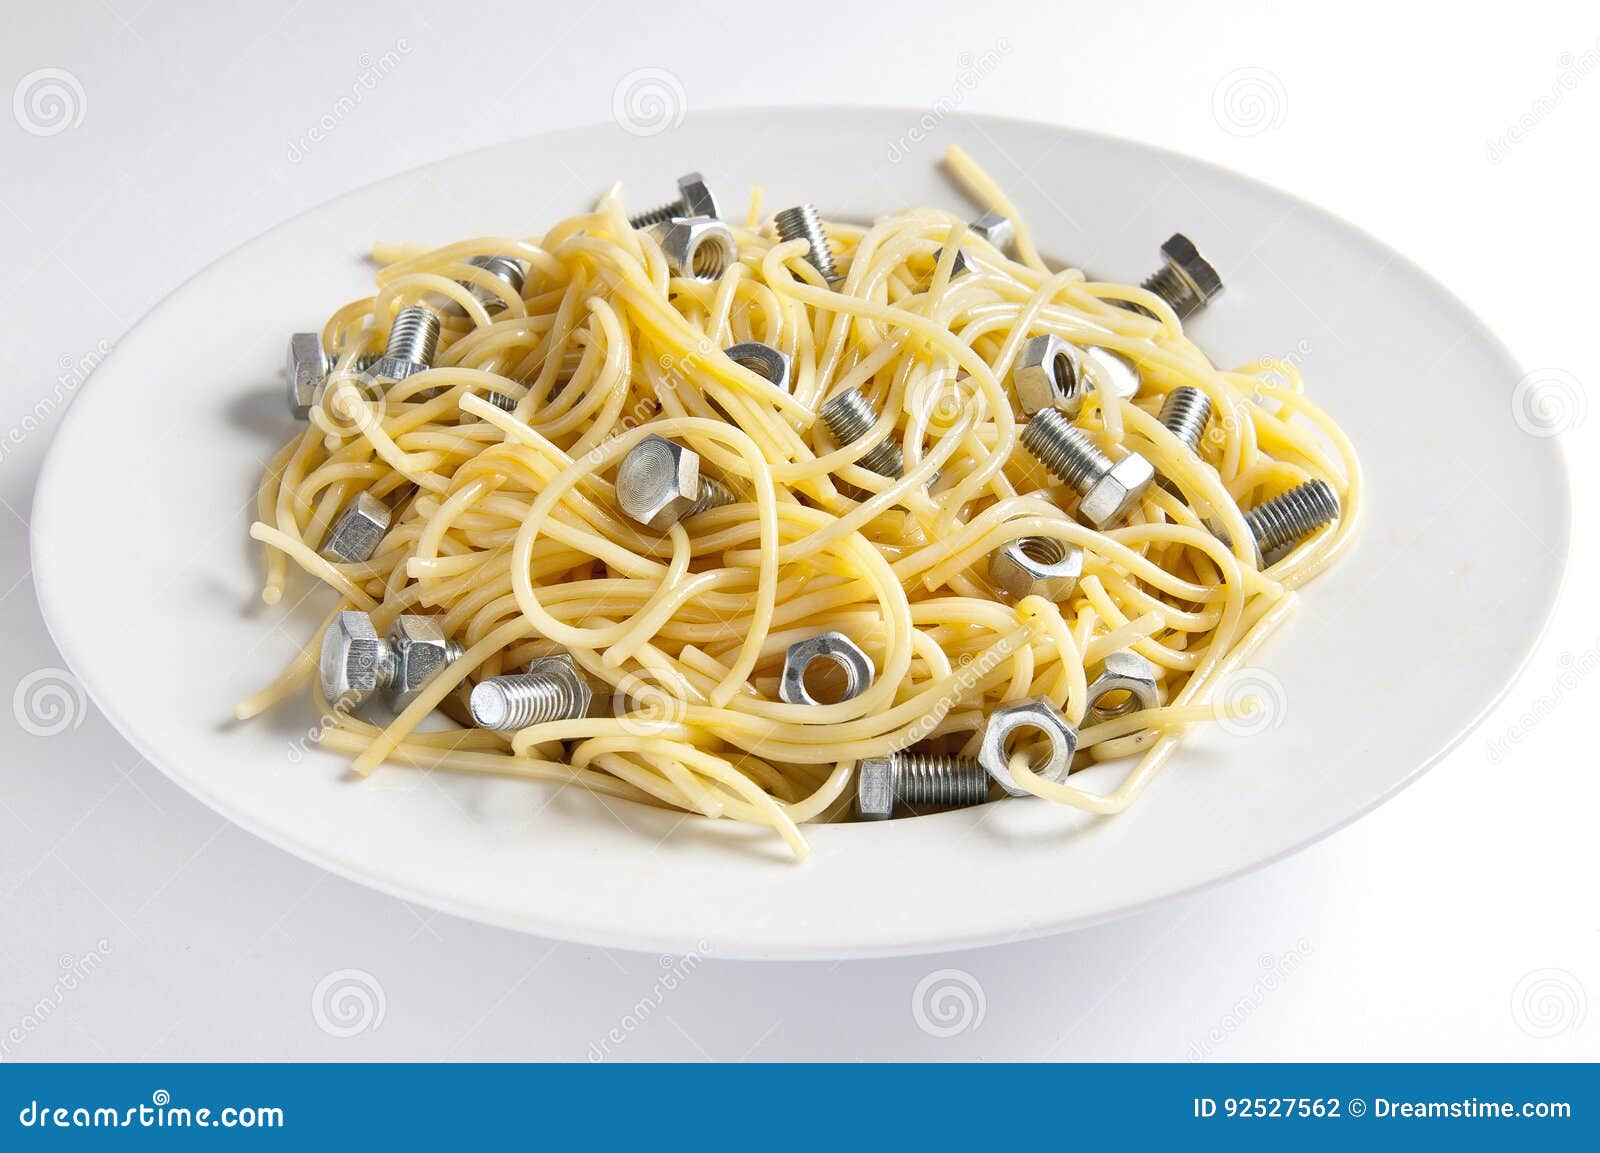 This Is Eat Stock Photo Image Of Metafora Bulloni Cibo